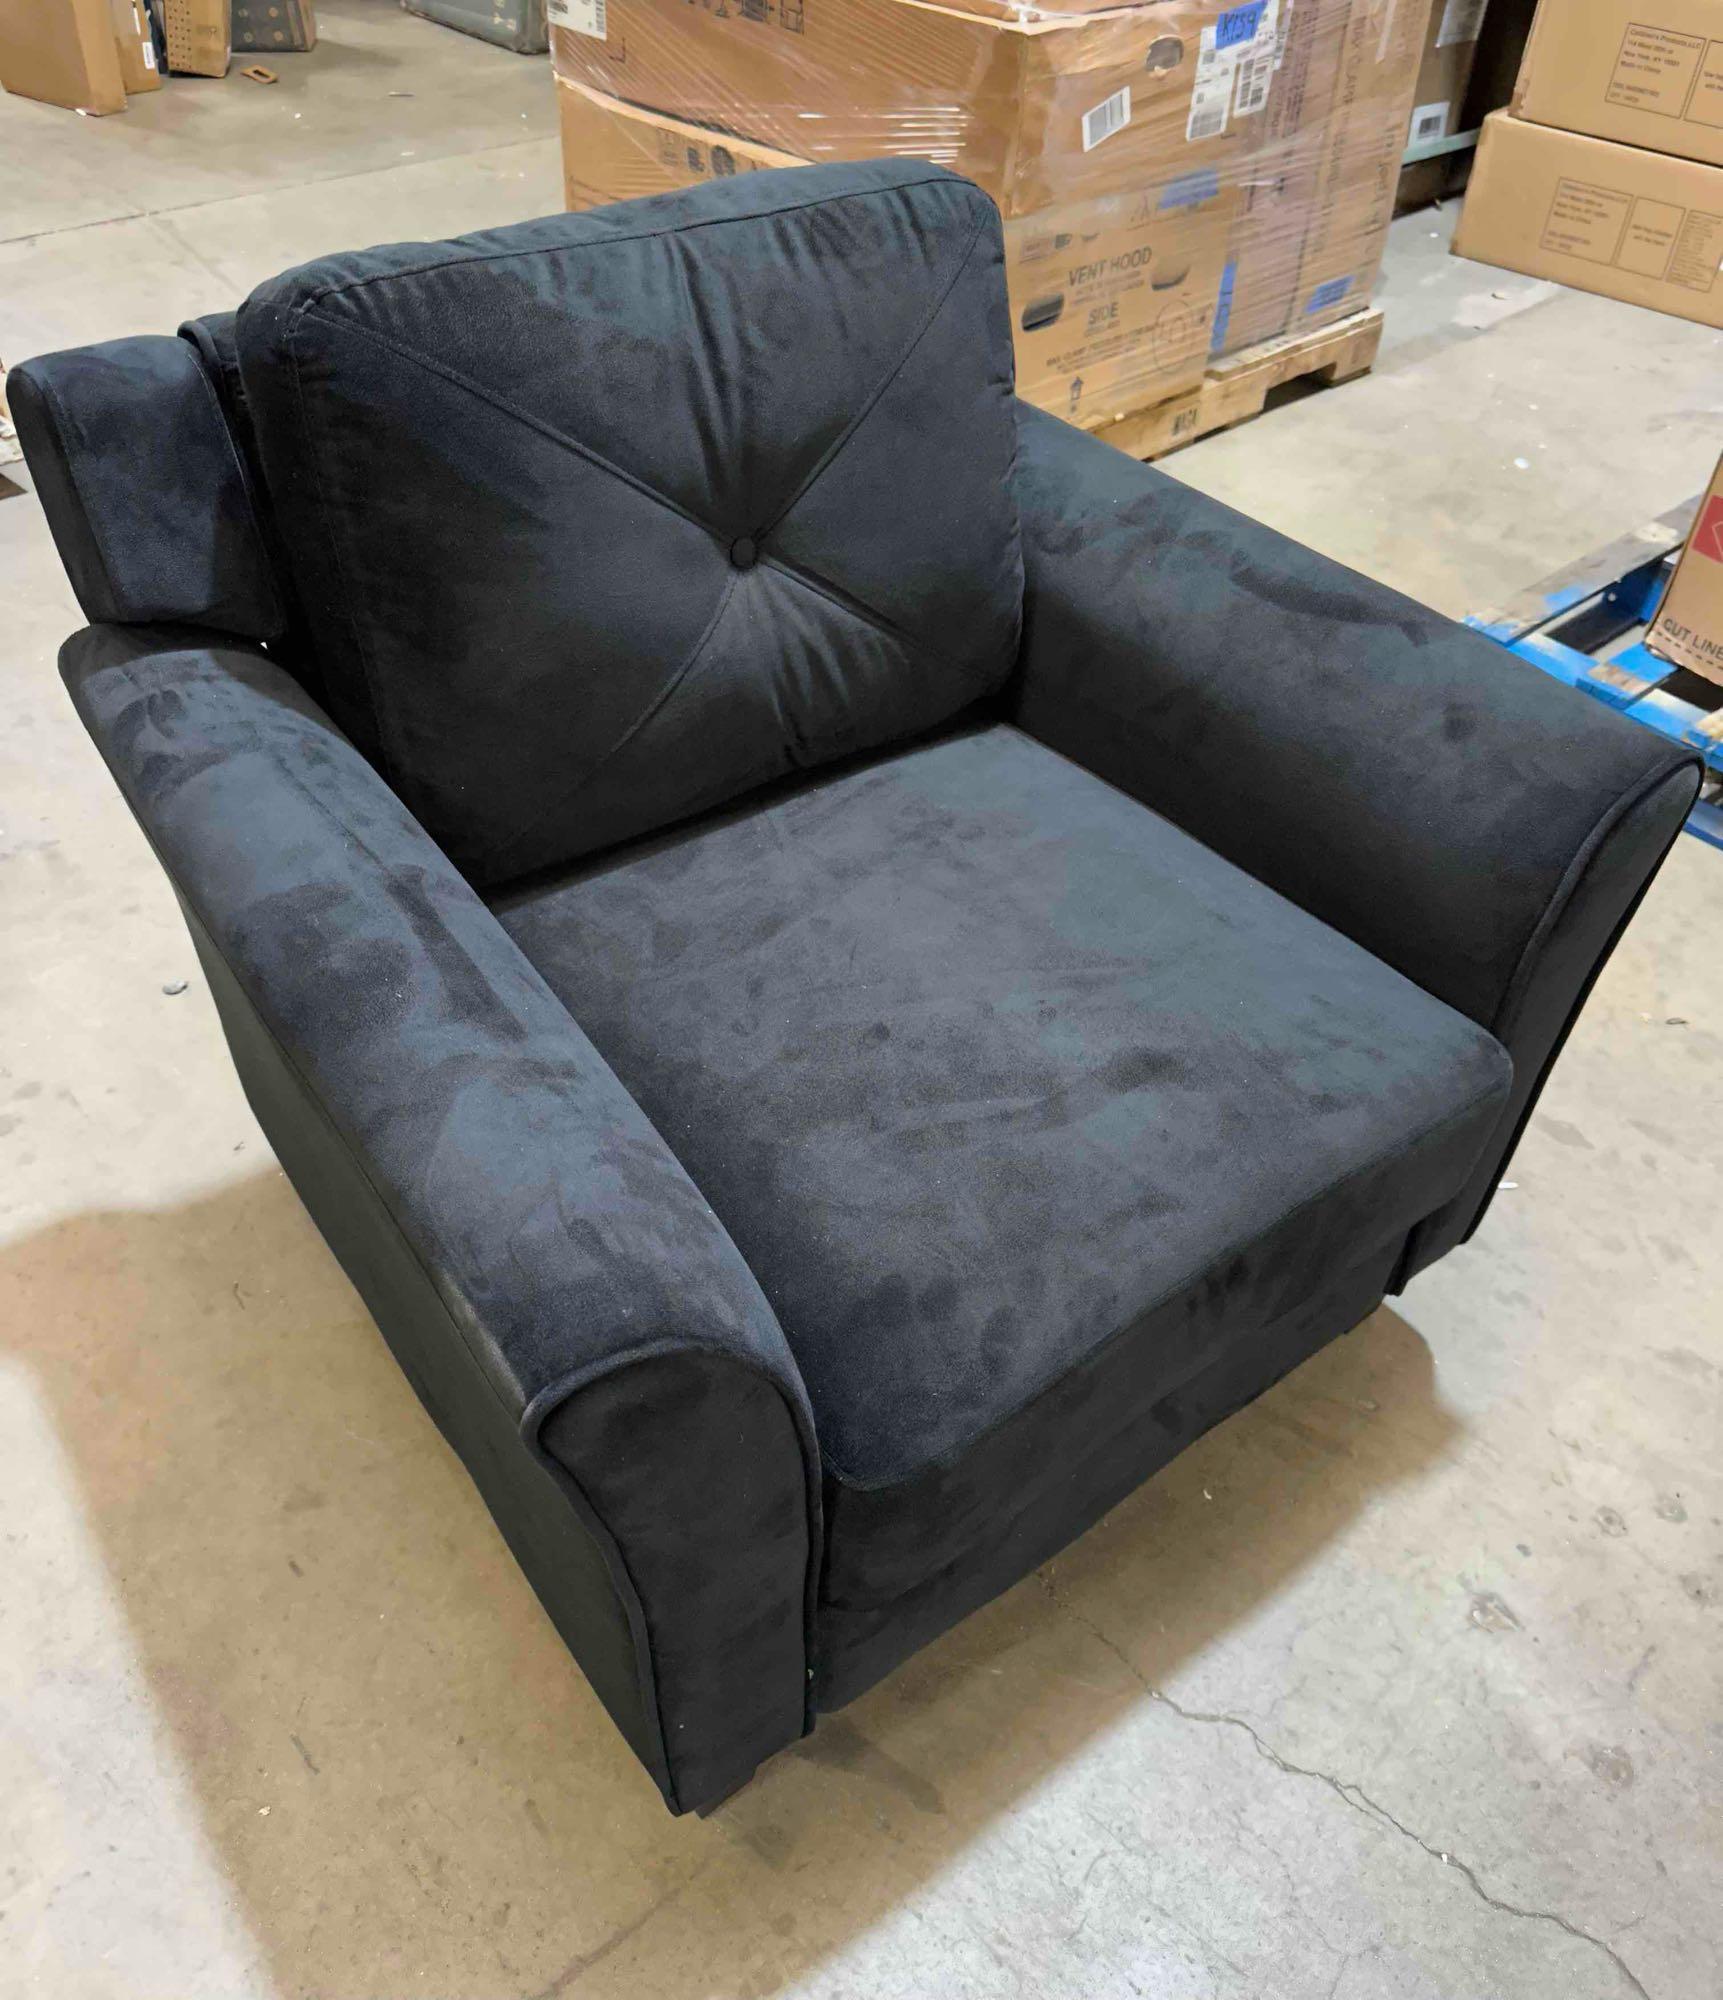 Fashionable Living Room Sofa Single Seat, Black